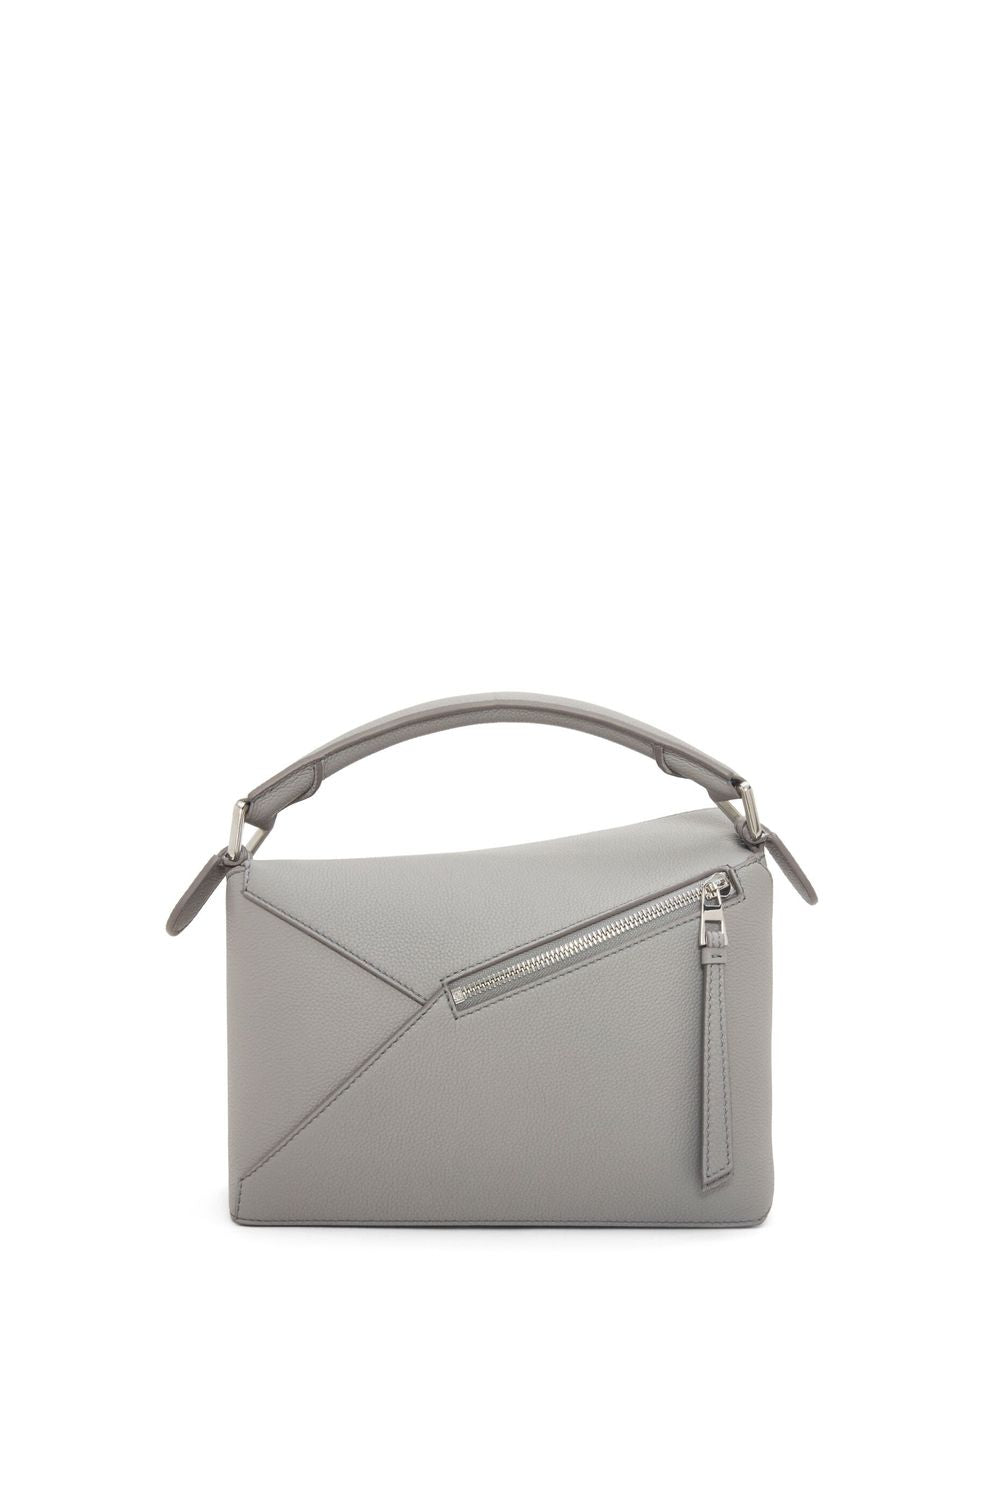 LOEWE Women's Mini Puzzle Edge Crossbody Handbag in Pearl Grey - Calfskin, Cotton & Linen Blend